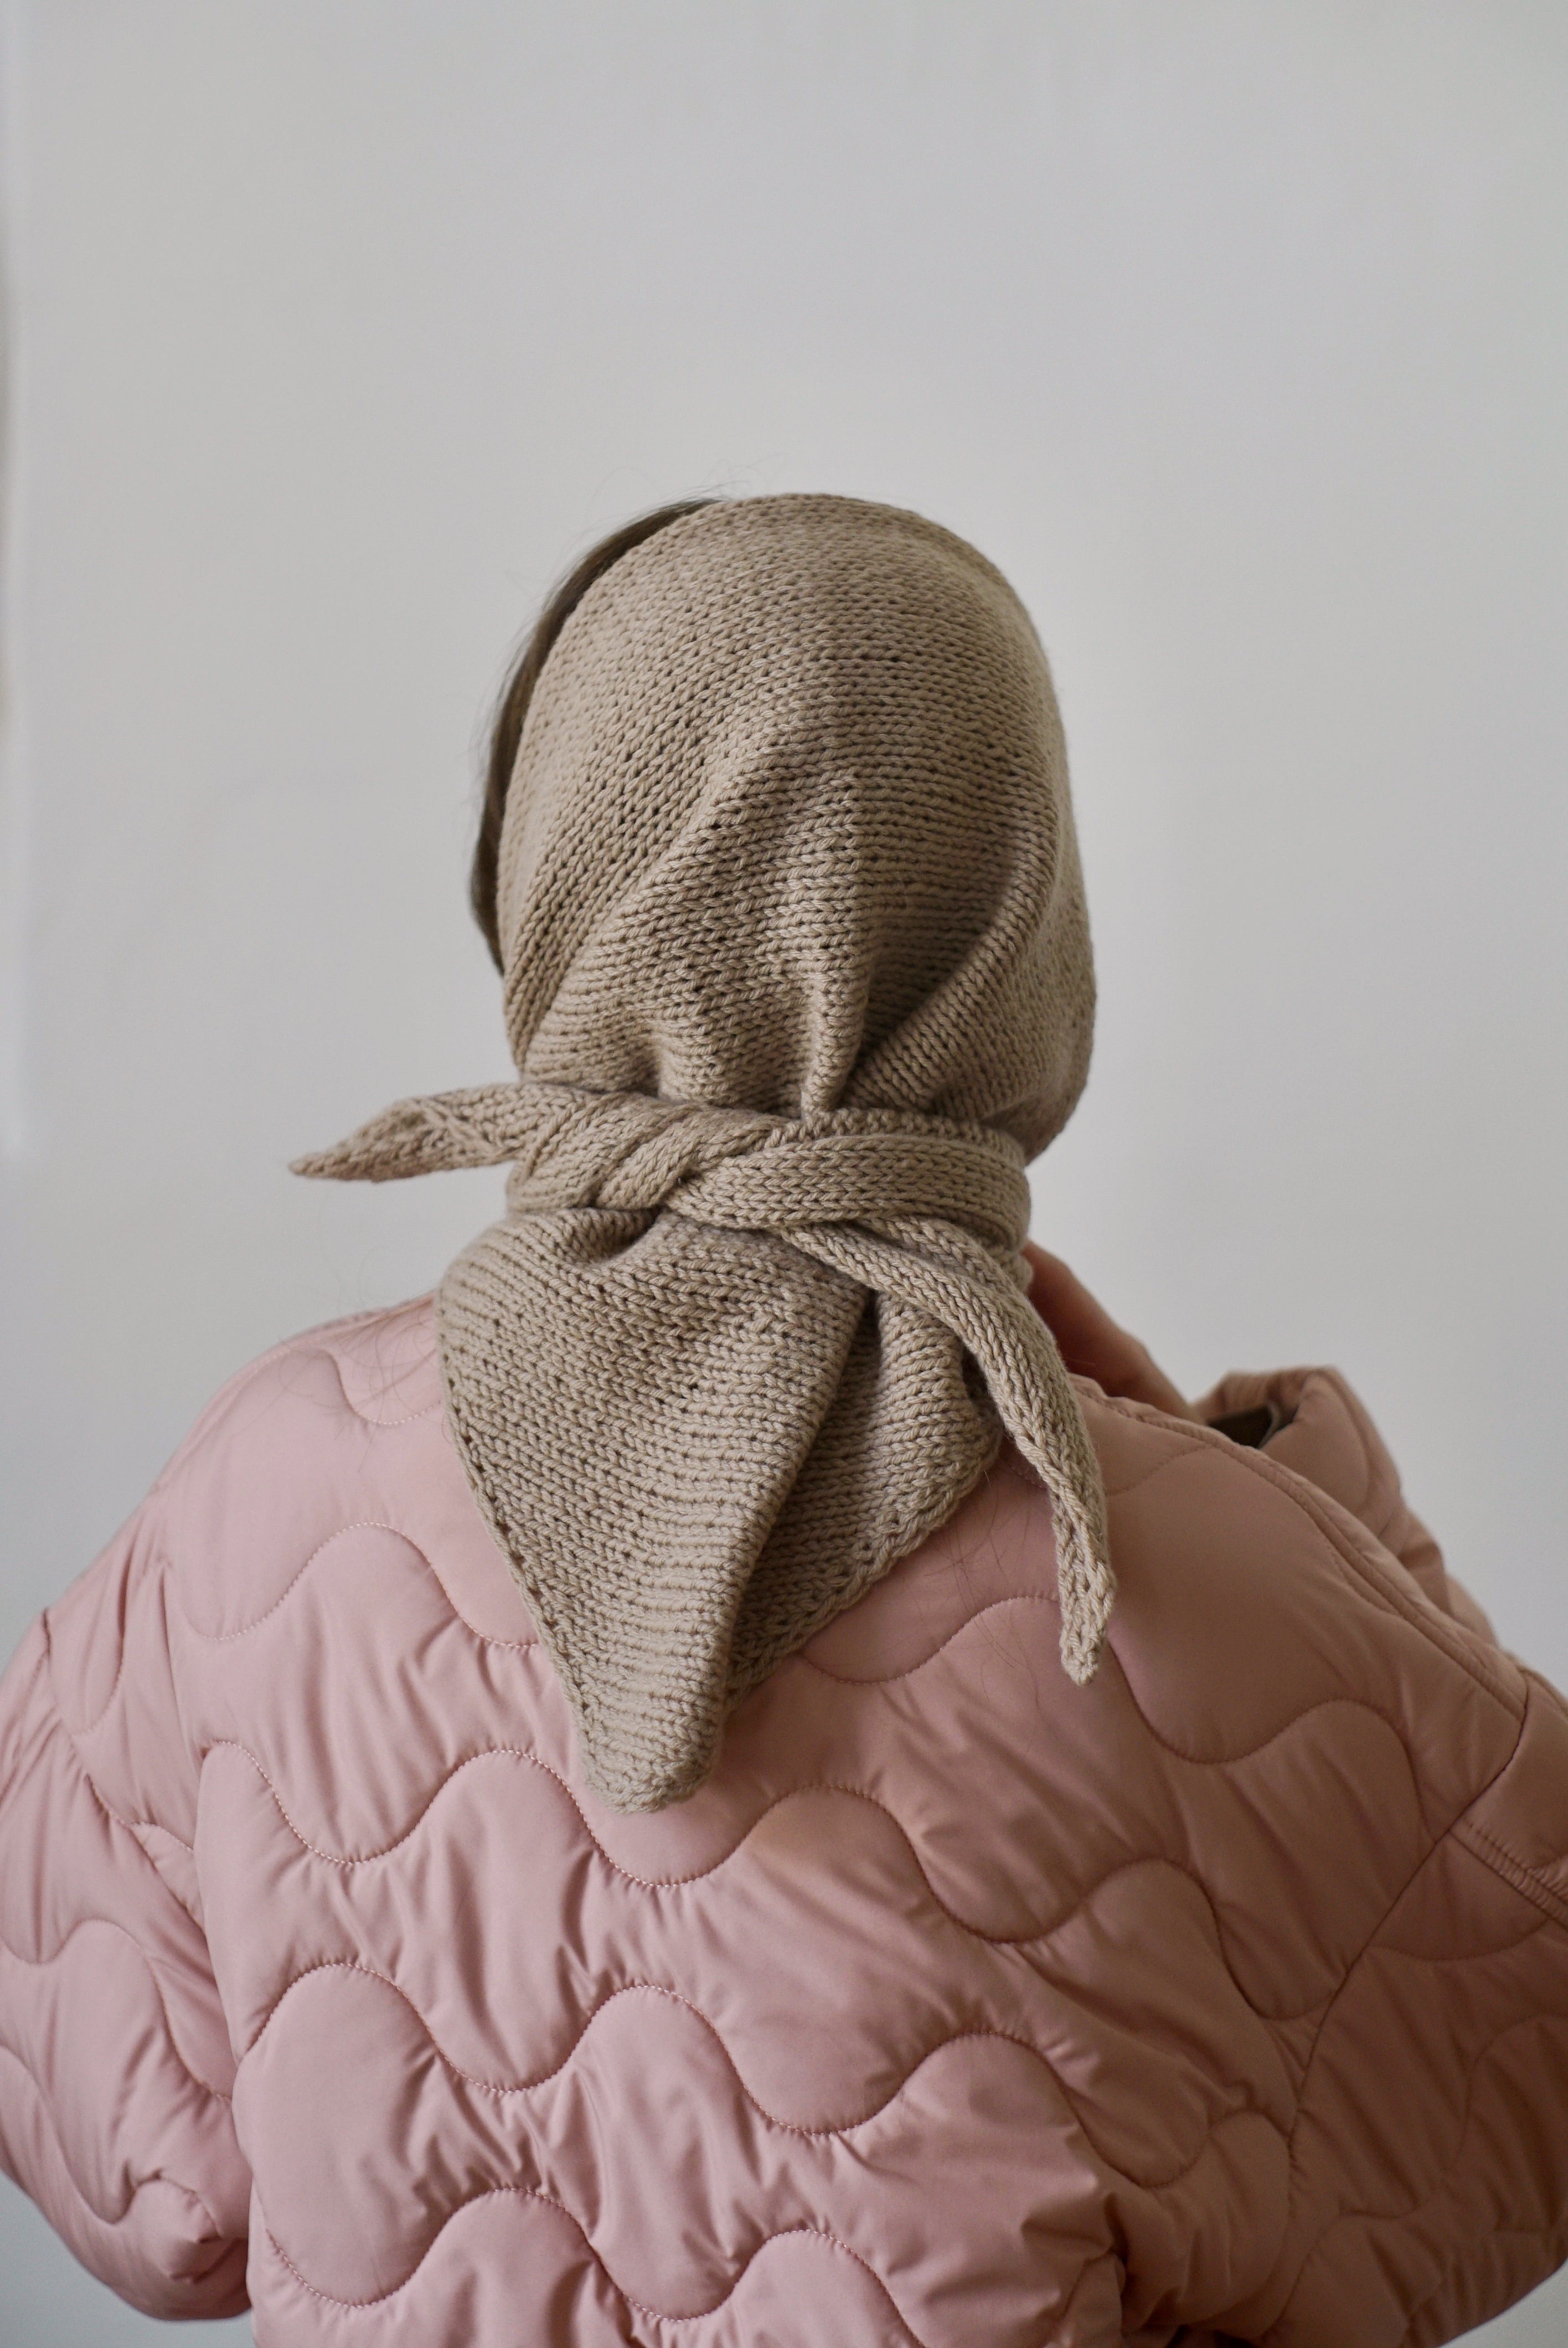 Marusique Stories - Merino Kosynka Headscarf